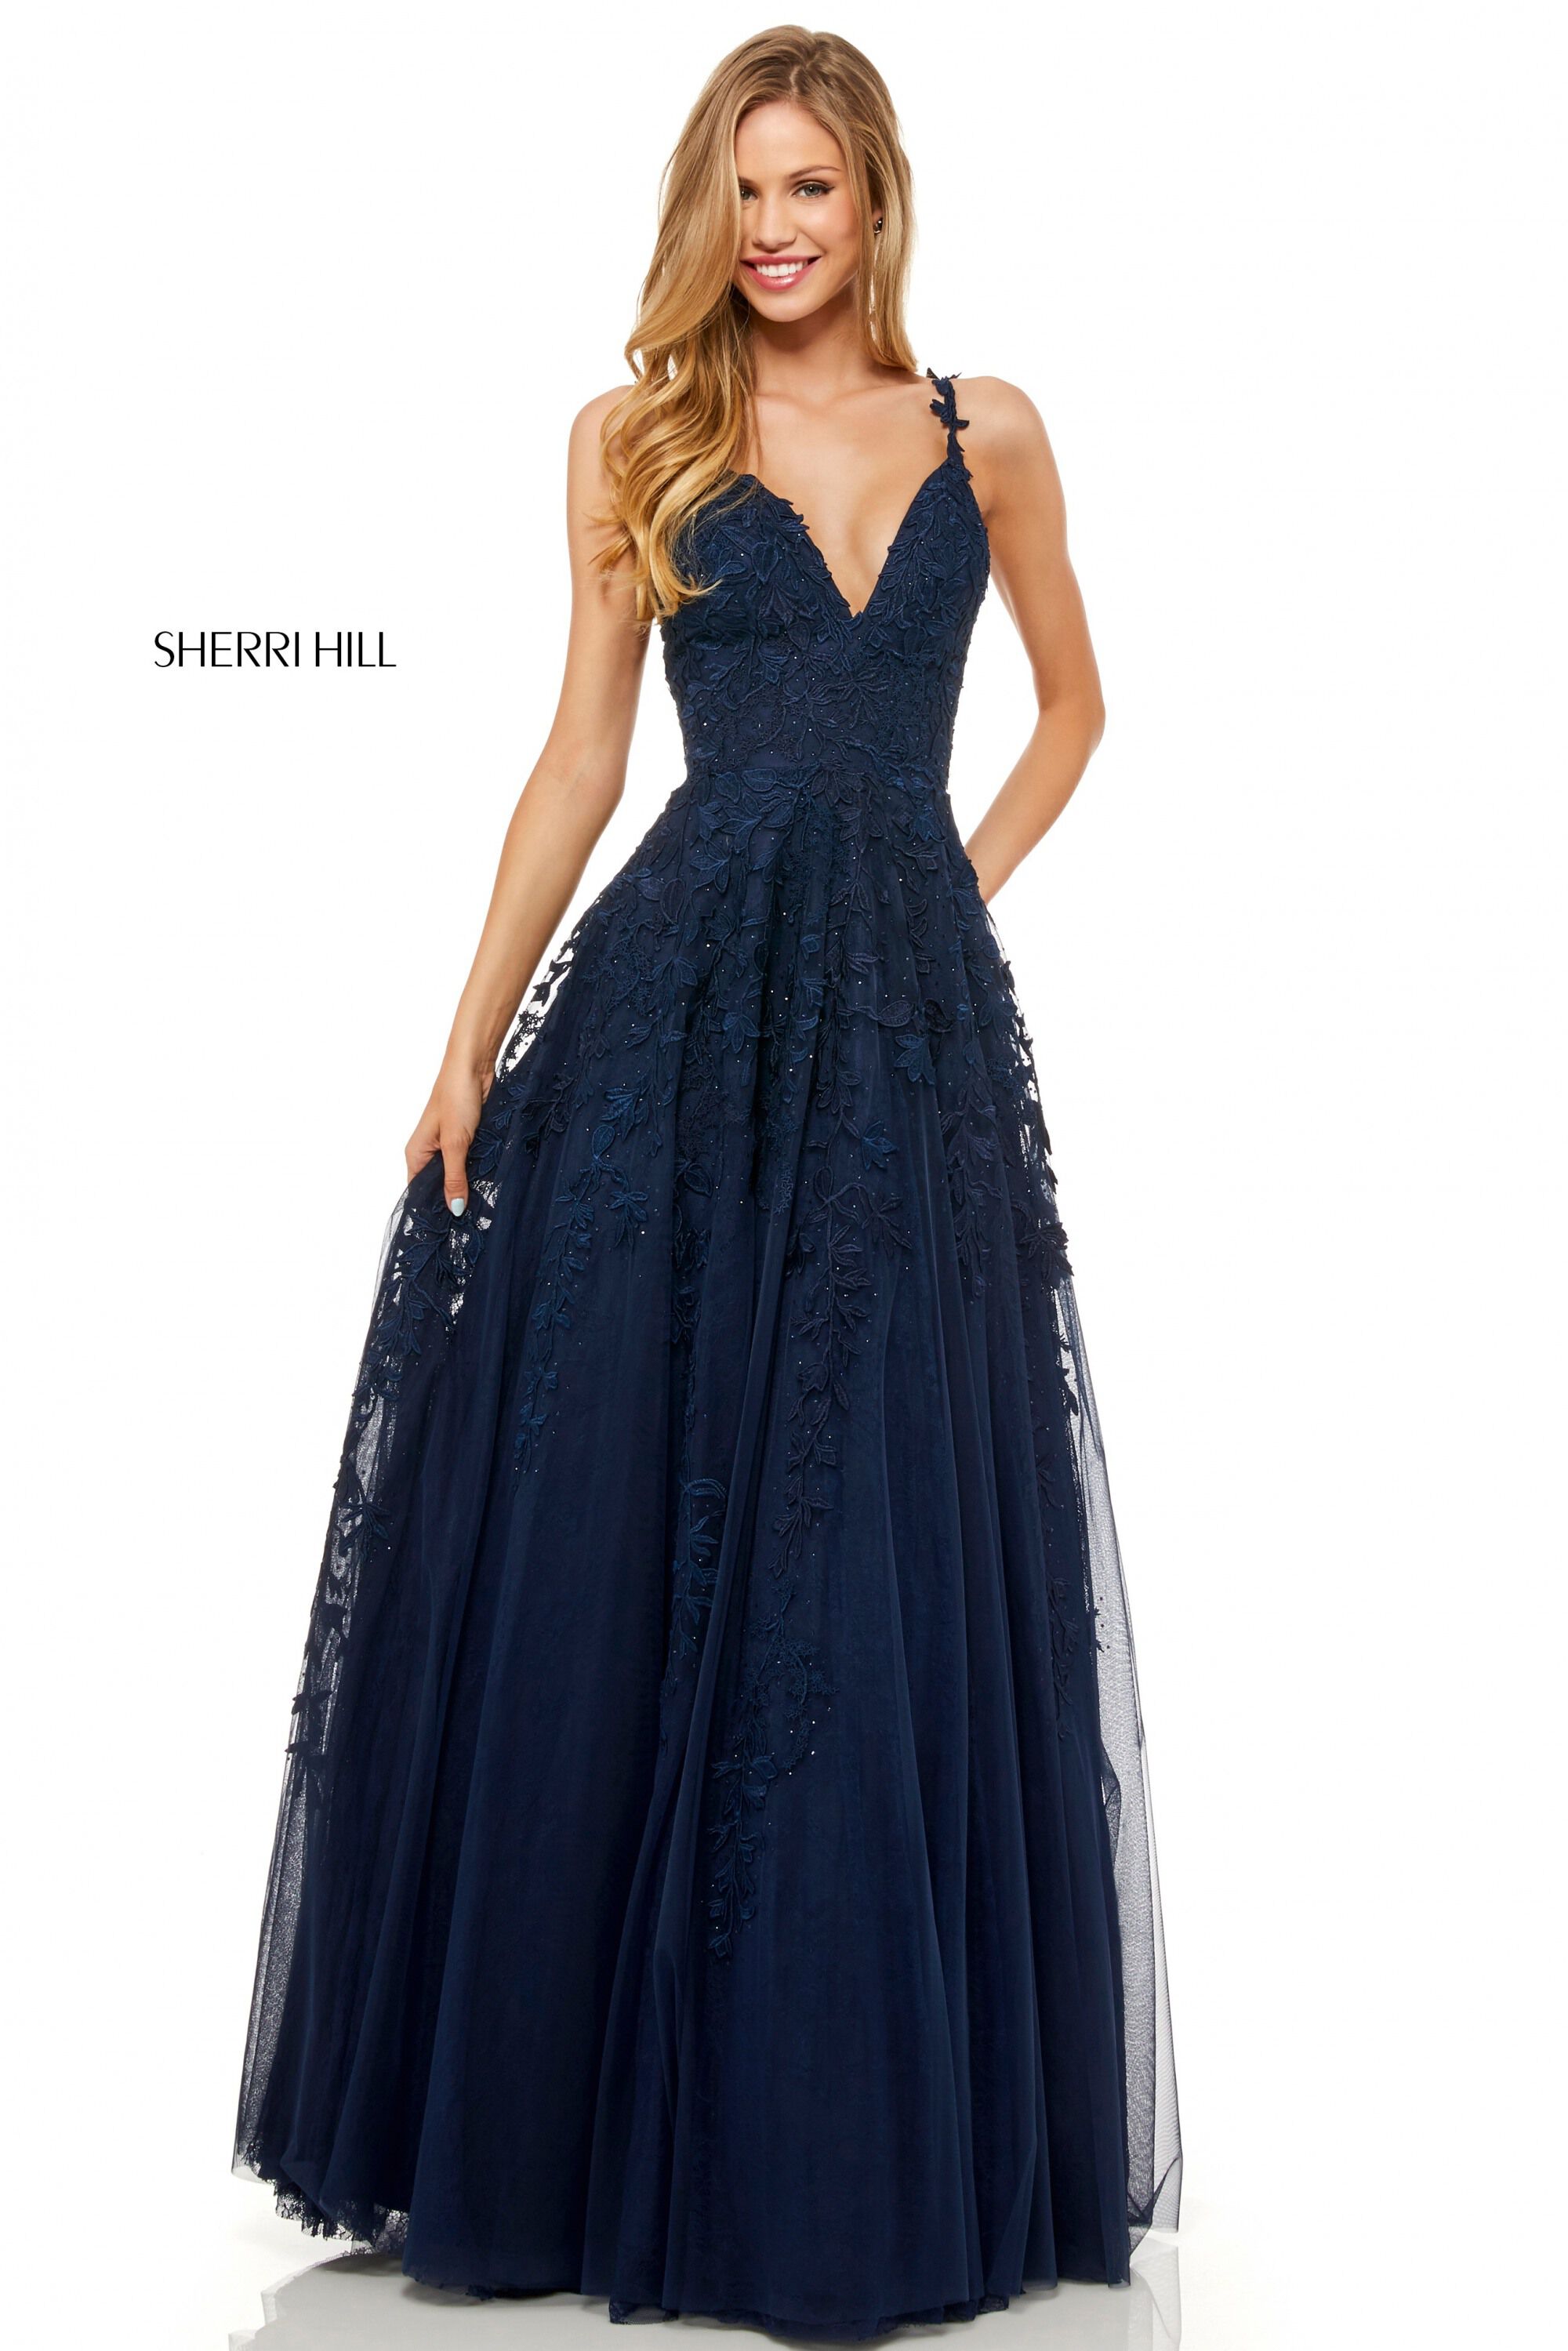 Buy dress style № 52342 designed by SherriHill